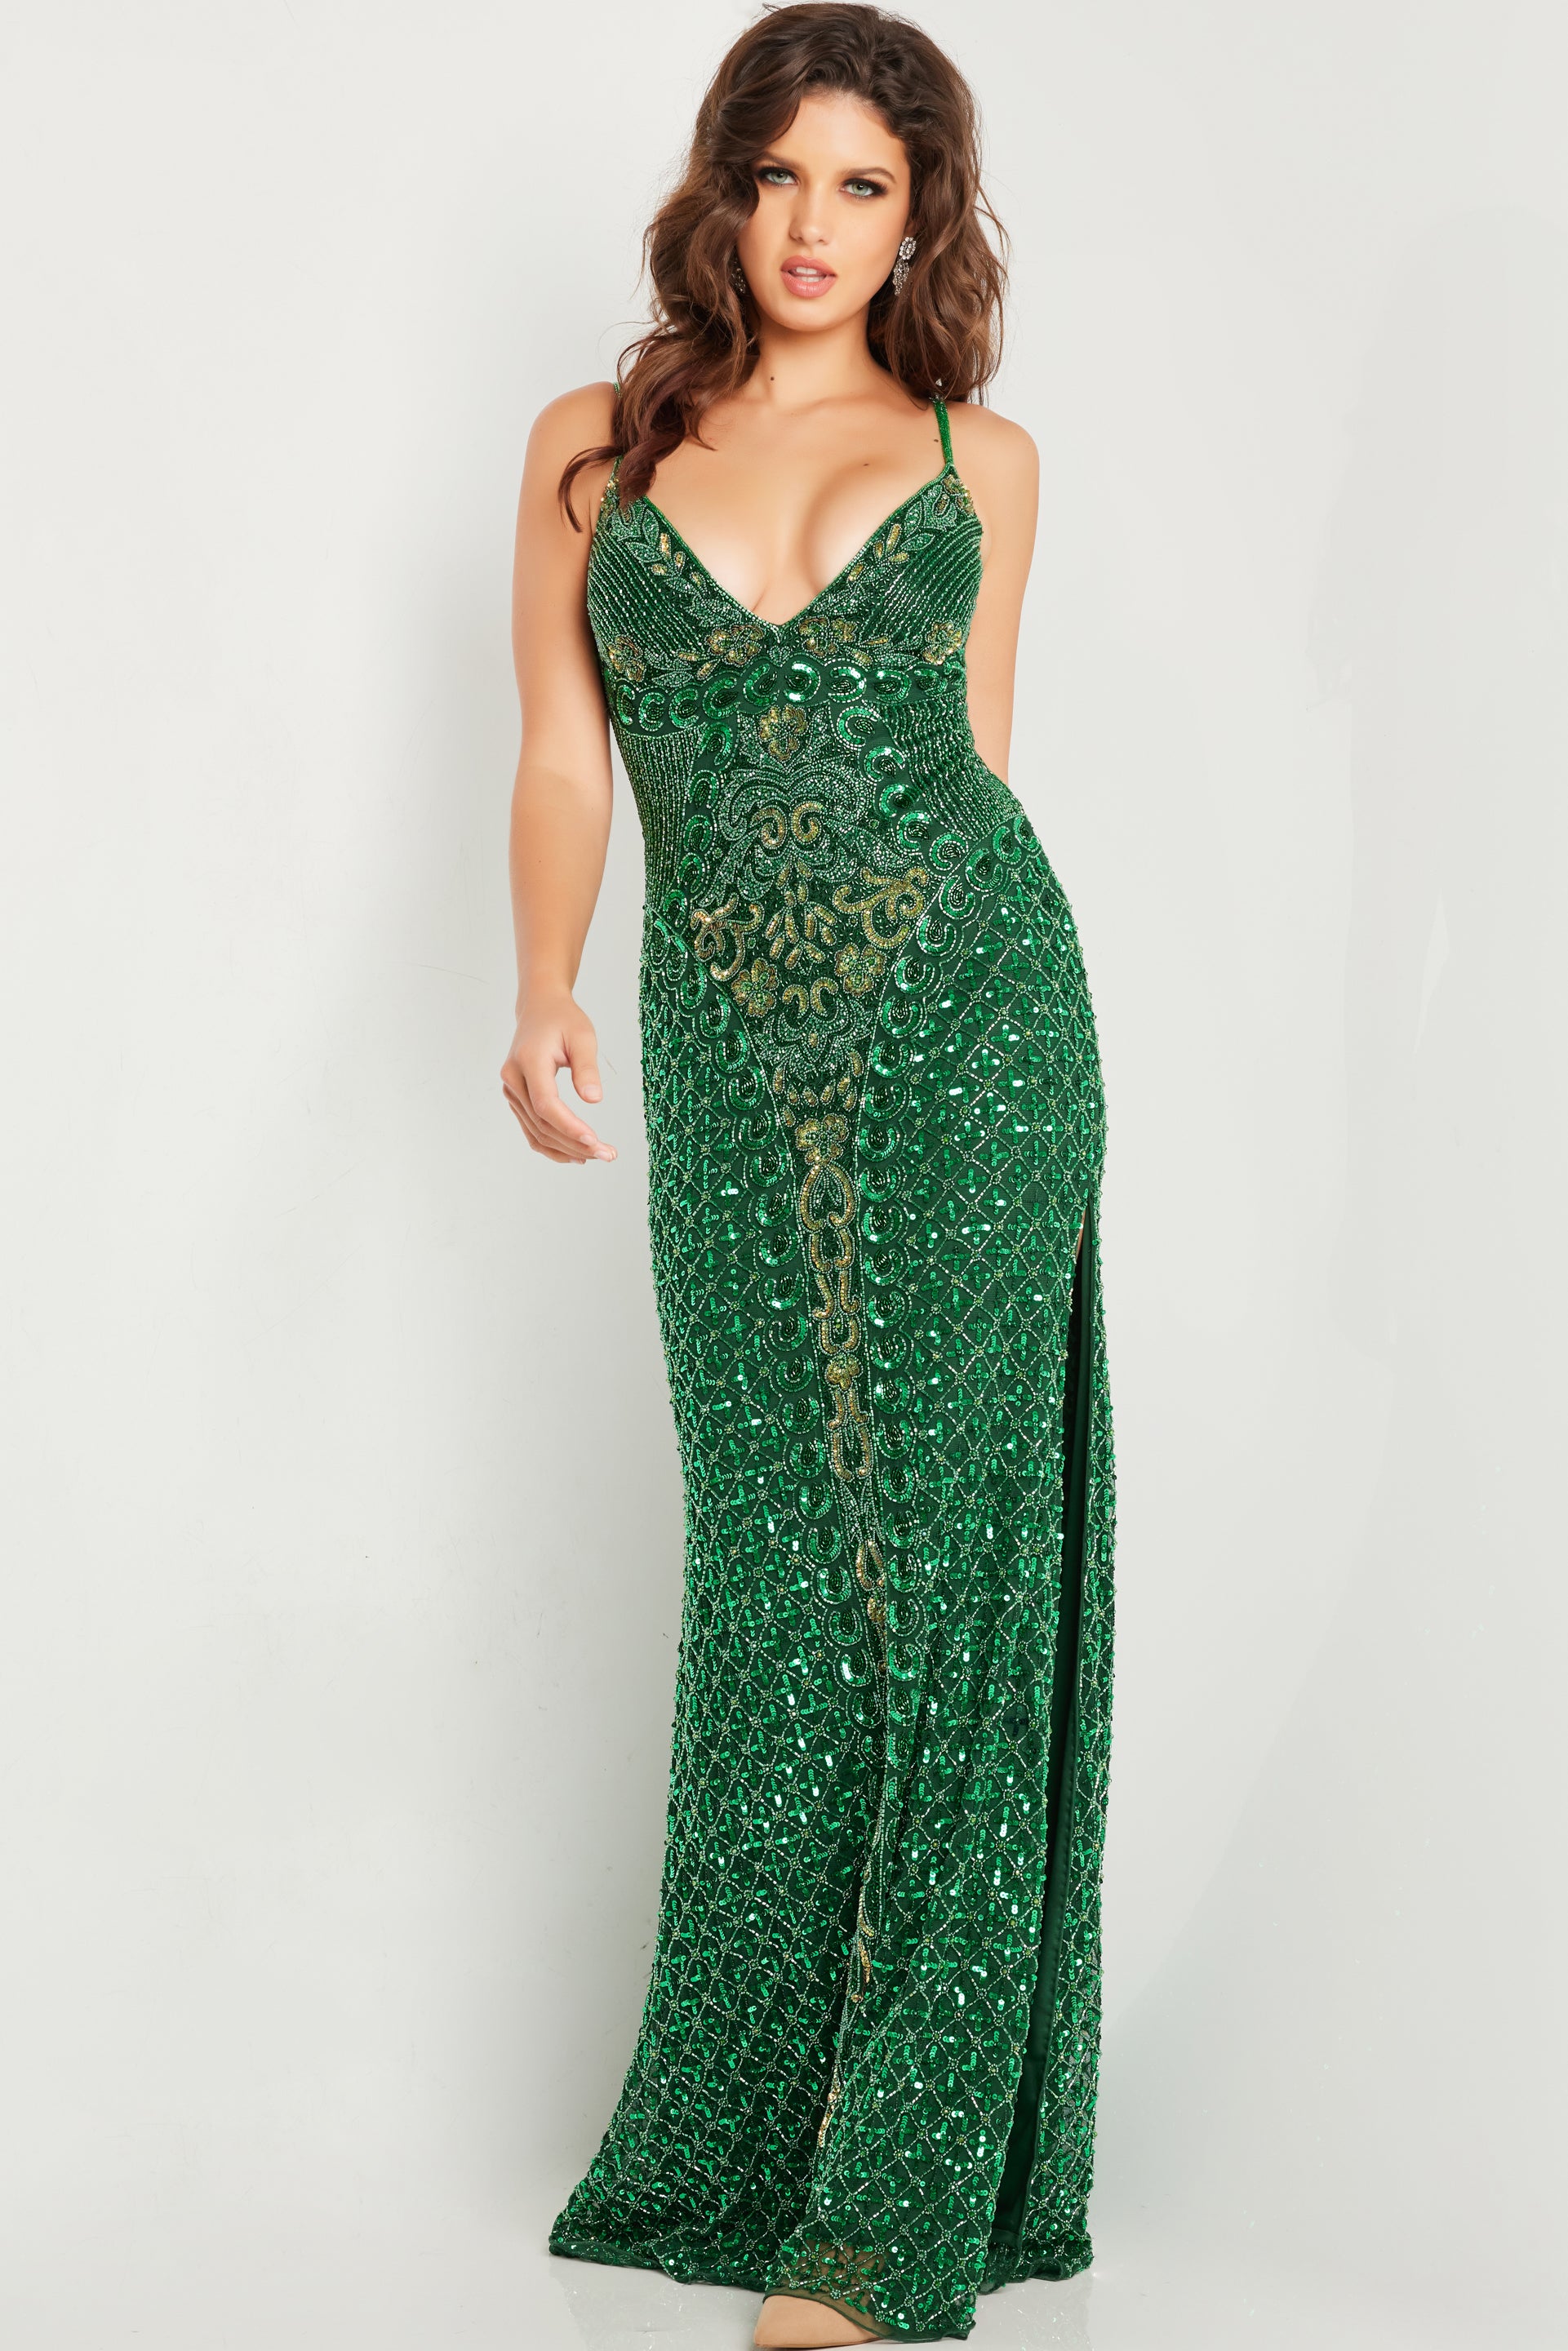 Emerald Jovani 36643 Long Formal Beaded Evening Prom Dress for $620.0 ...